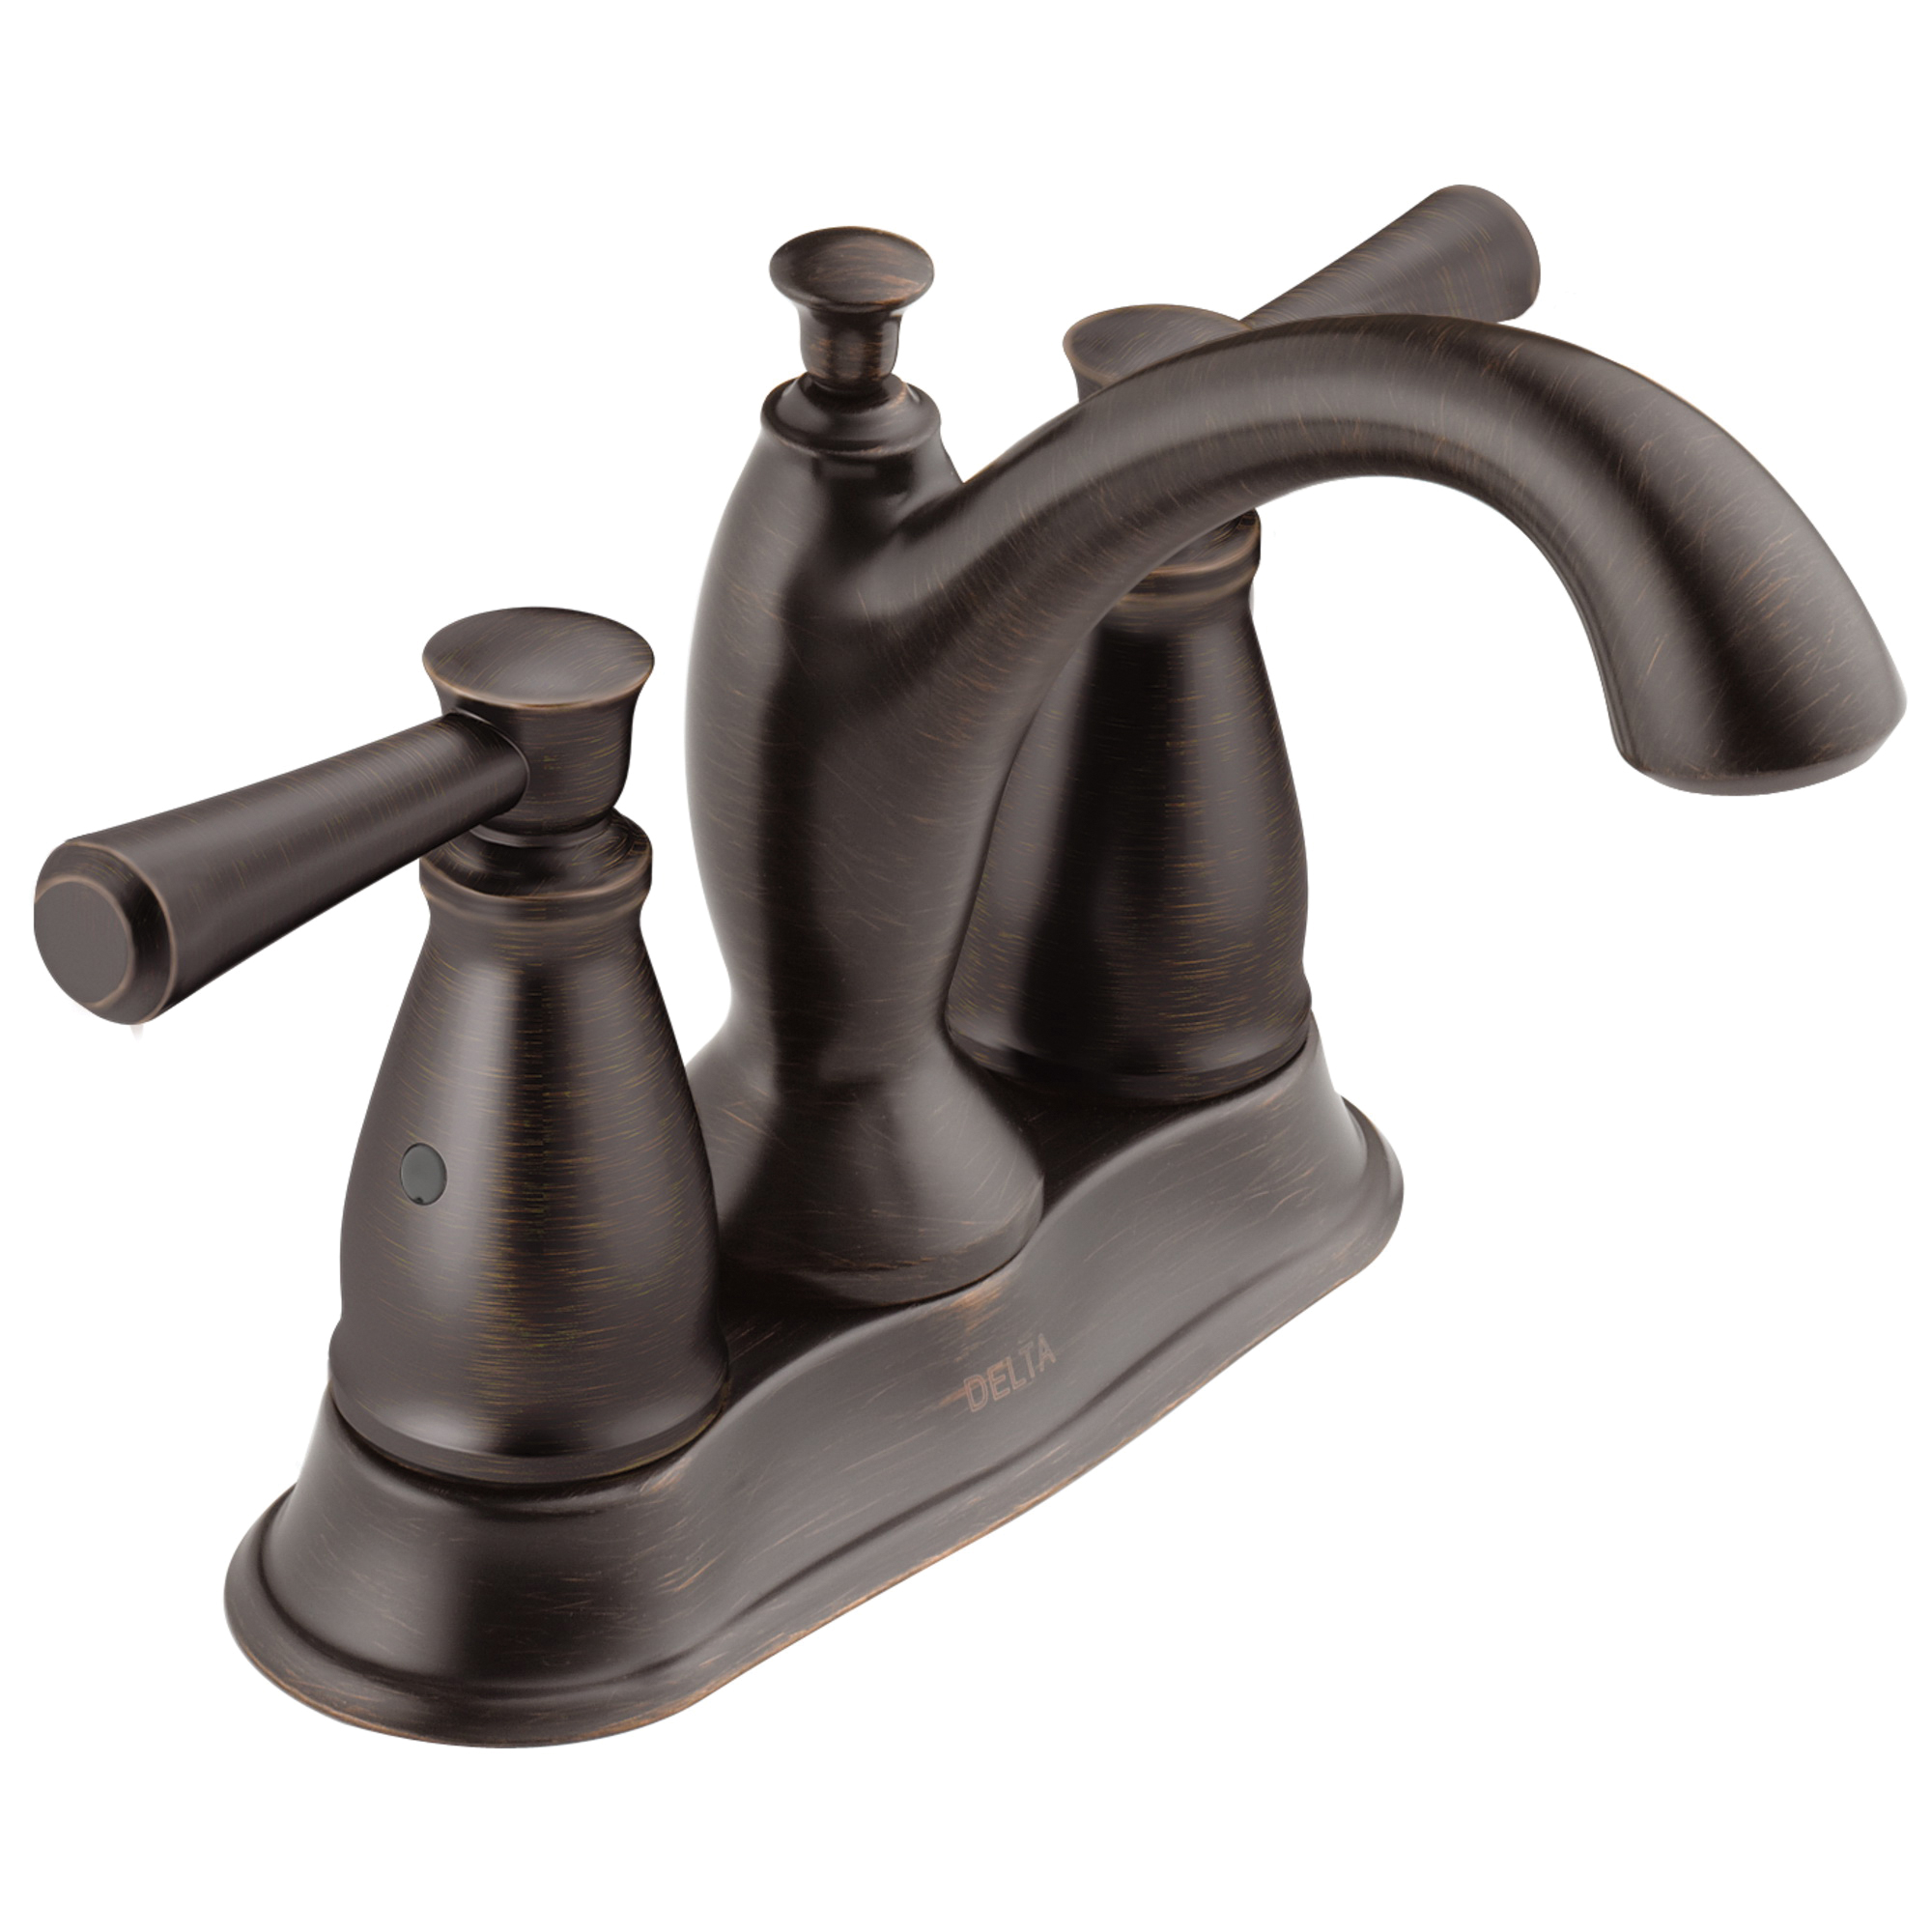 DELTA® 2593-RBTP-DST Tract-Pack™ Centerset Lavatory Faucet, Linden™, Venetian Bronze, 2 Handles, 50/50 Pop-Up Drain, 1.2 gpm